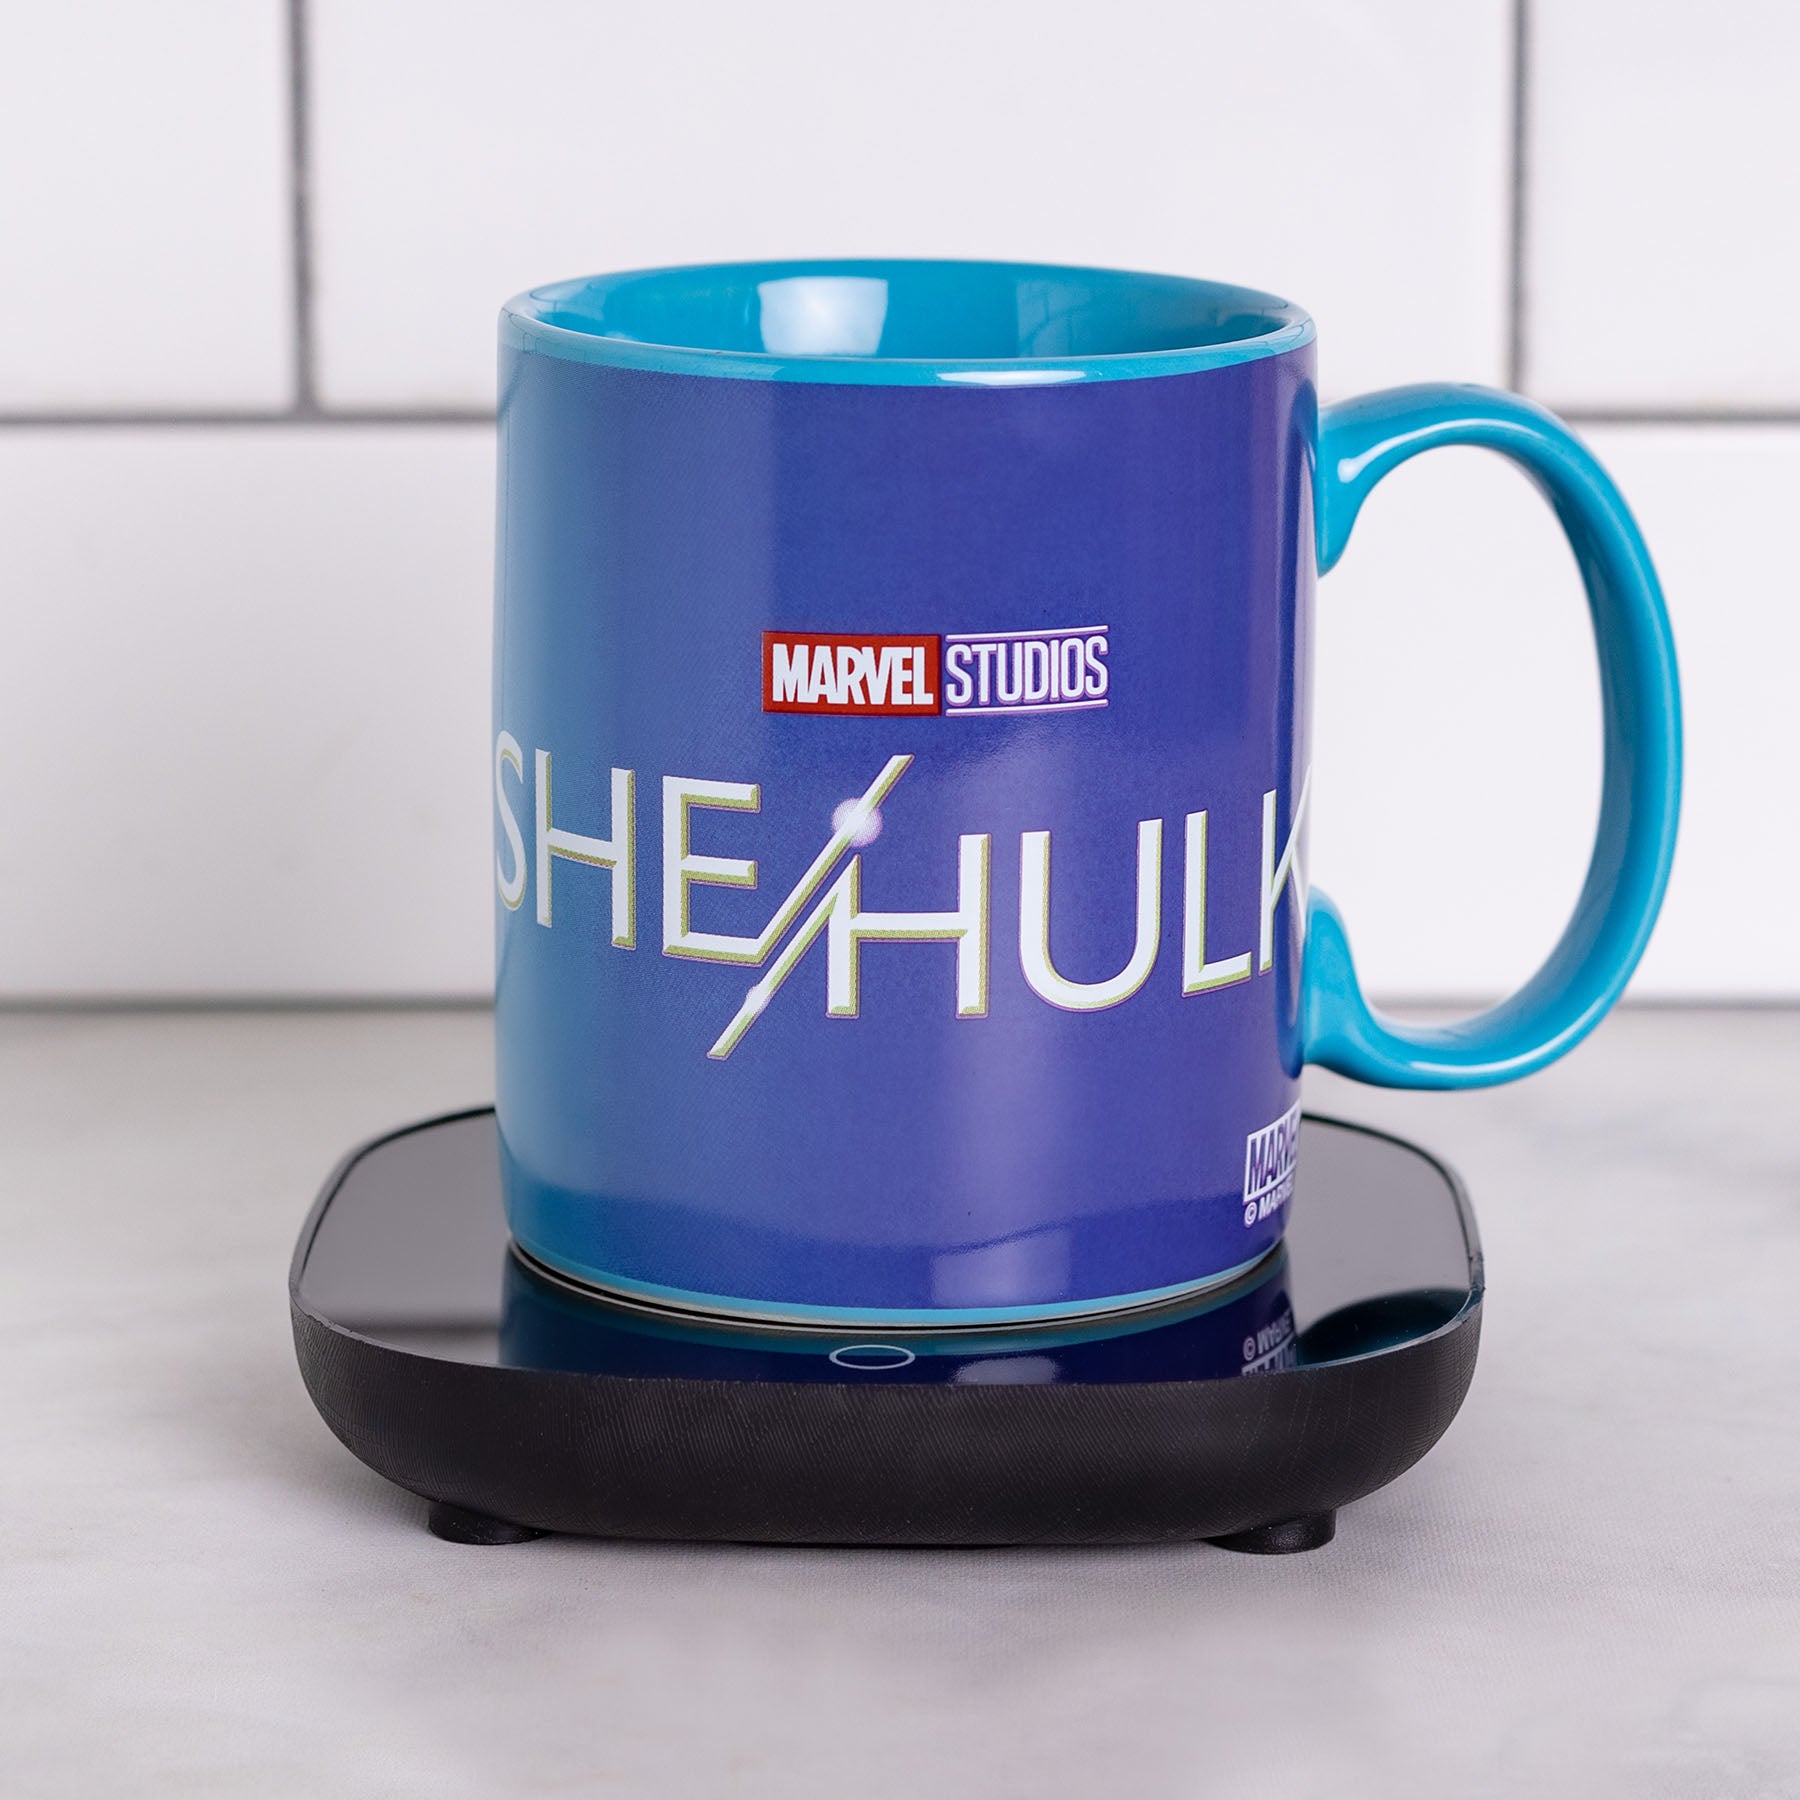 Uncanny Brands Marvel What If? Mug Warmer with Mug – Keeps Your